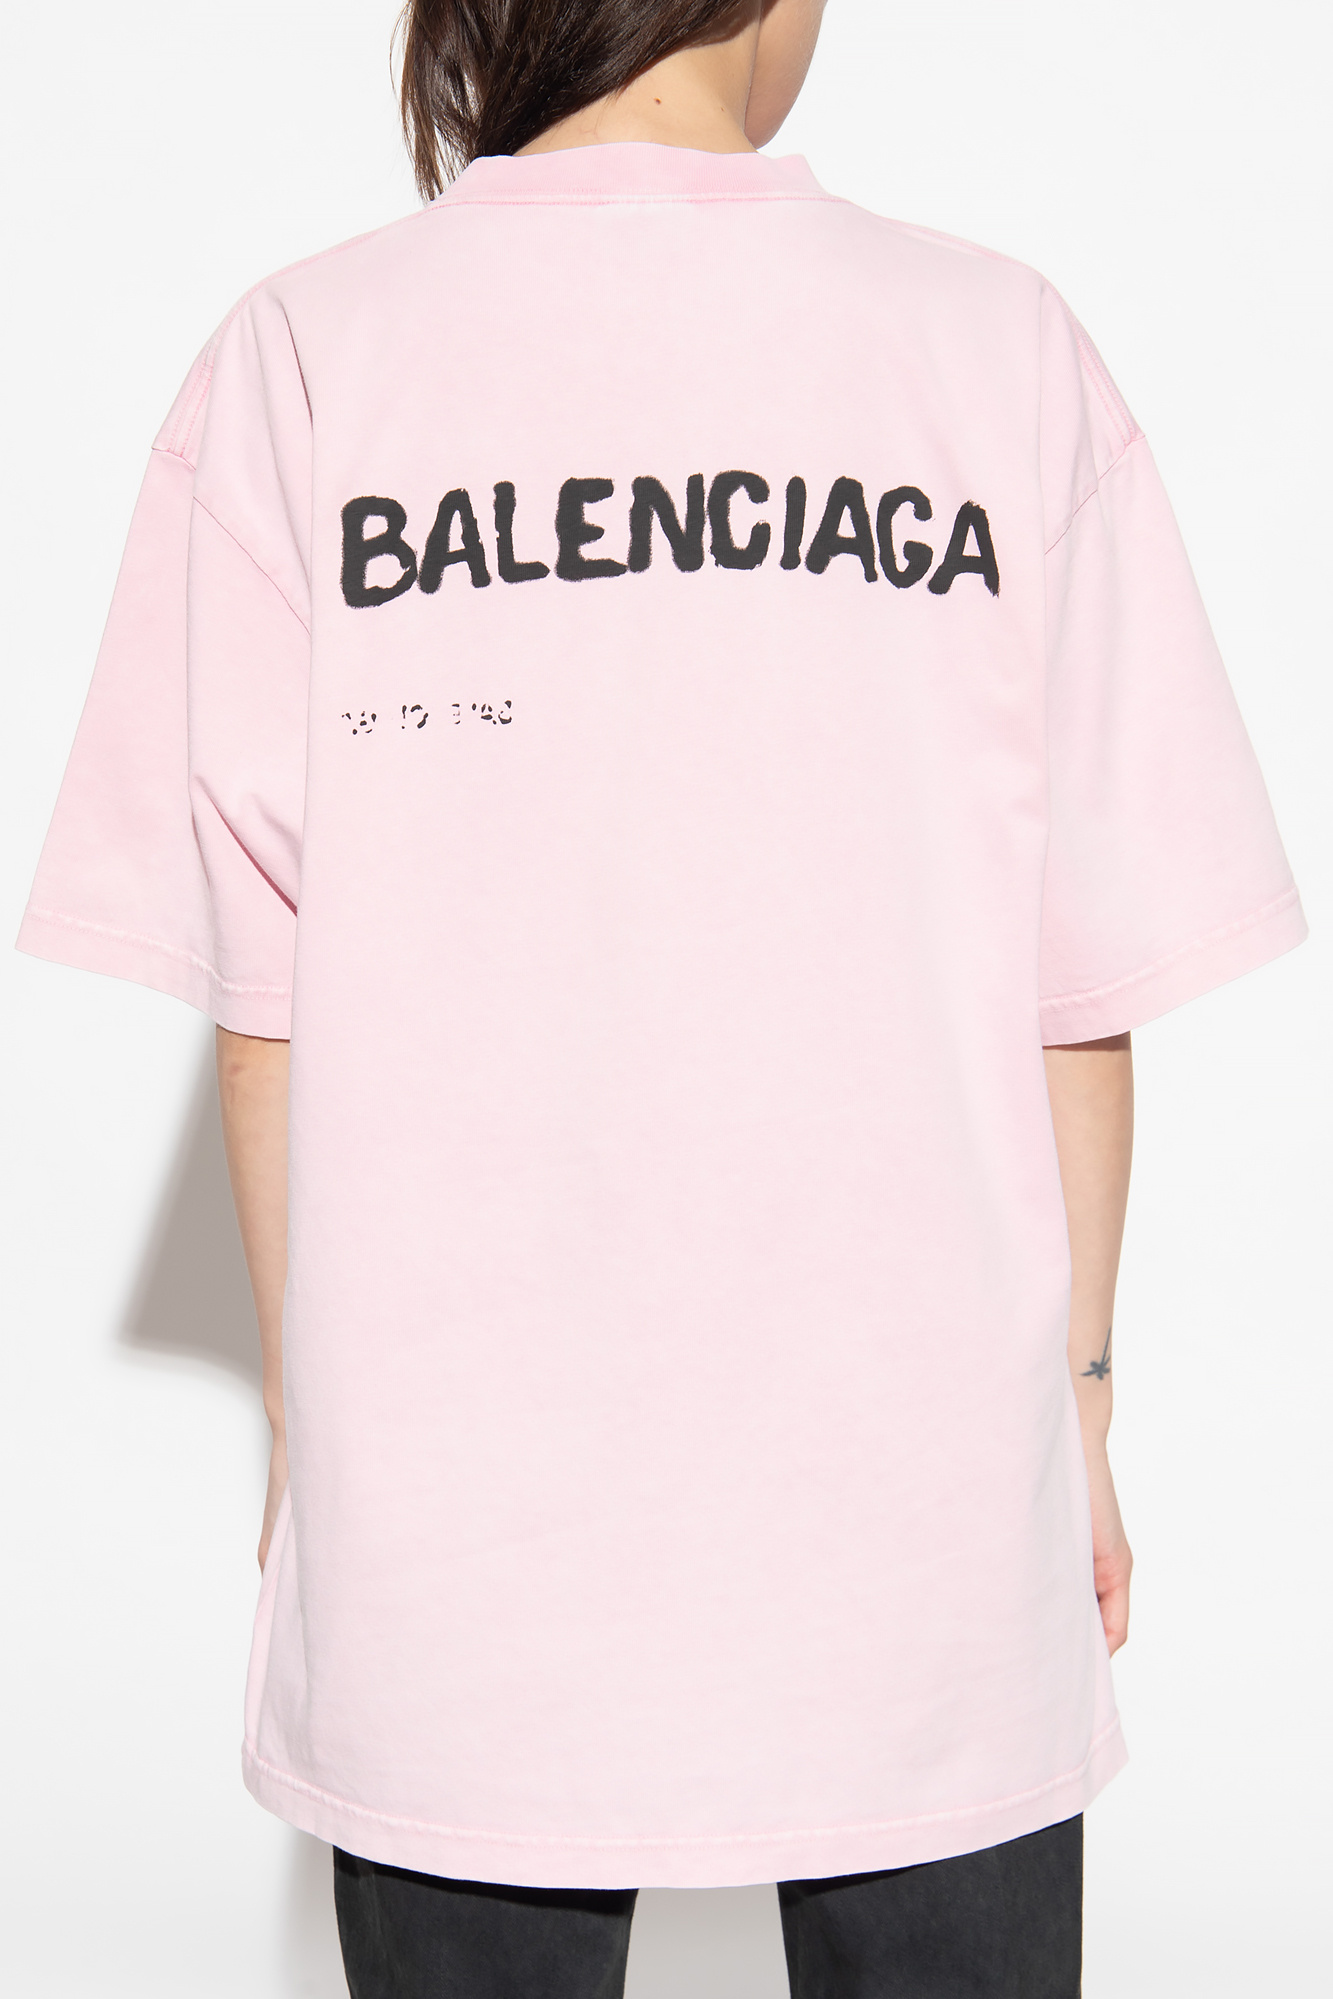 Balenciaga Balenciaga Language TShirt  Grailed